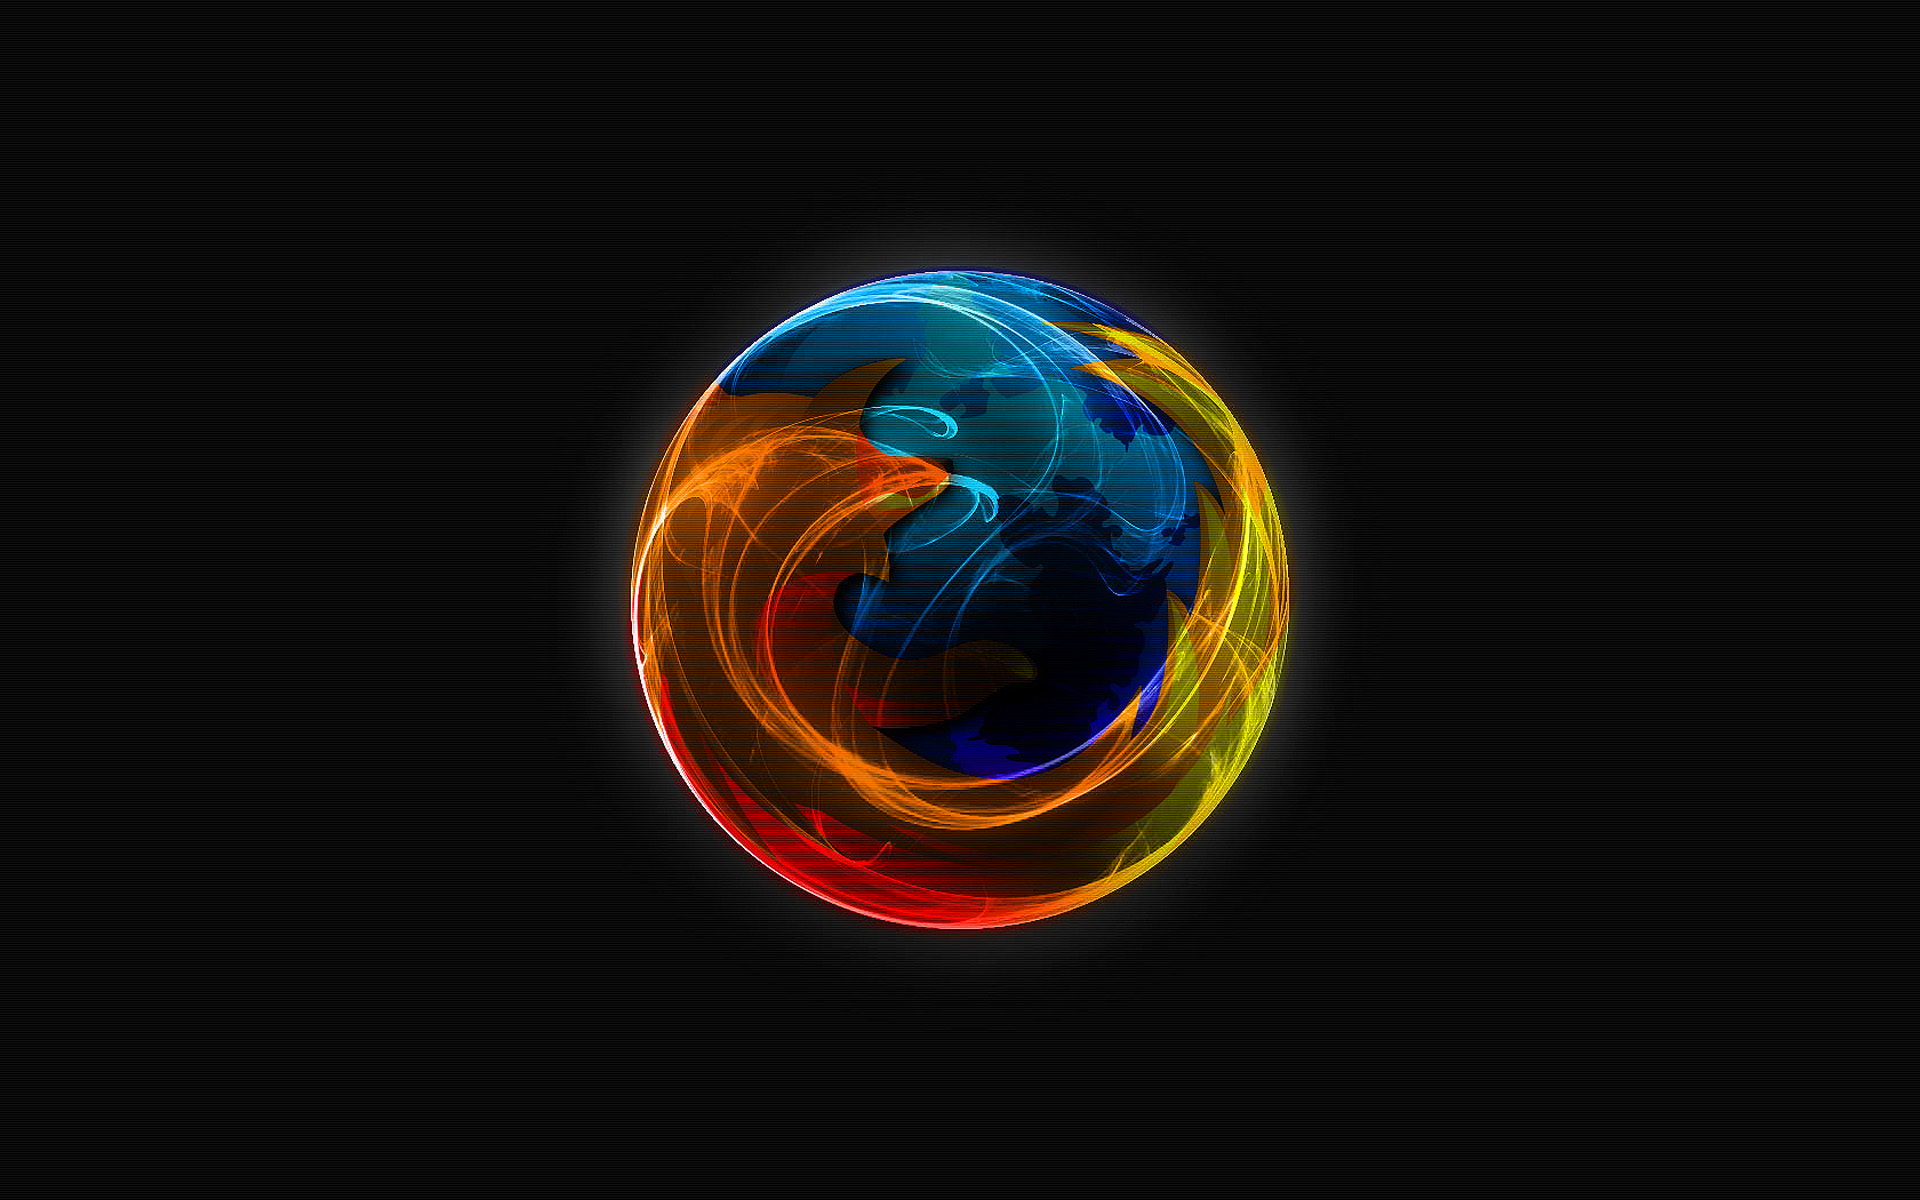 76+] Firefox Wallpaper Themes - WallpaperSafari